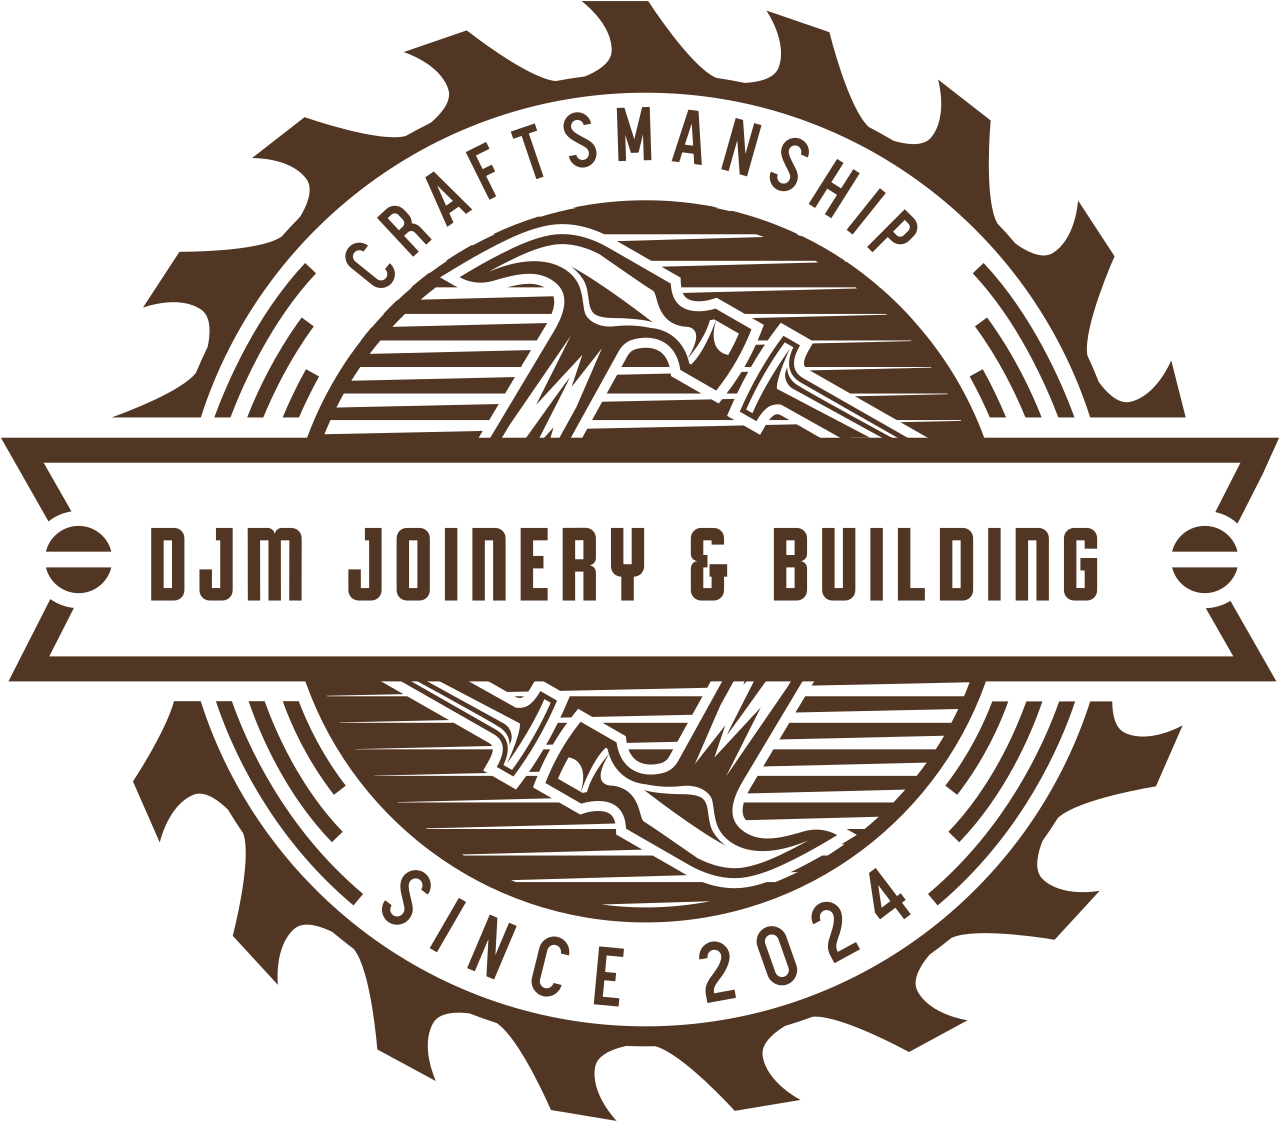 DJM joinery & building 's logo